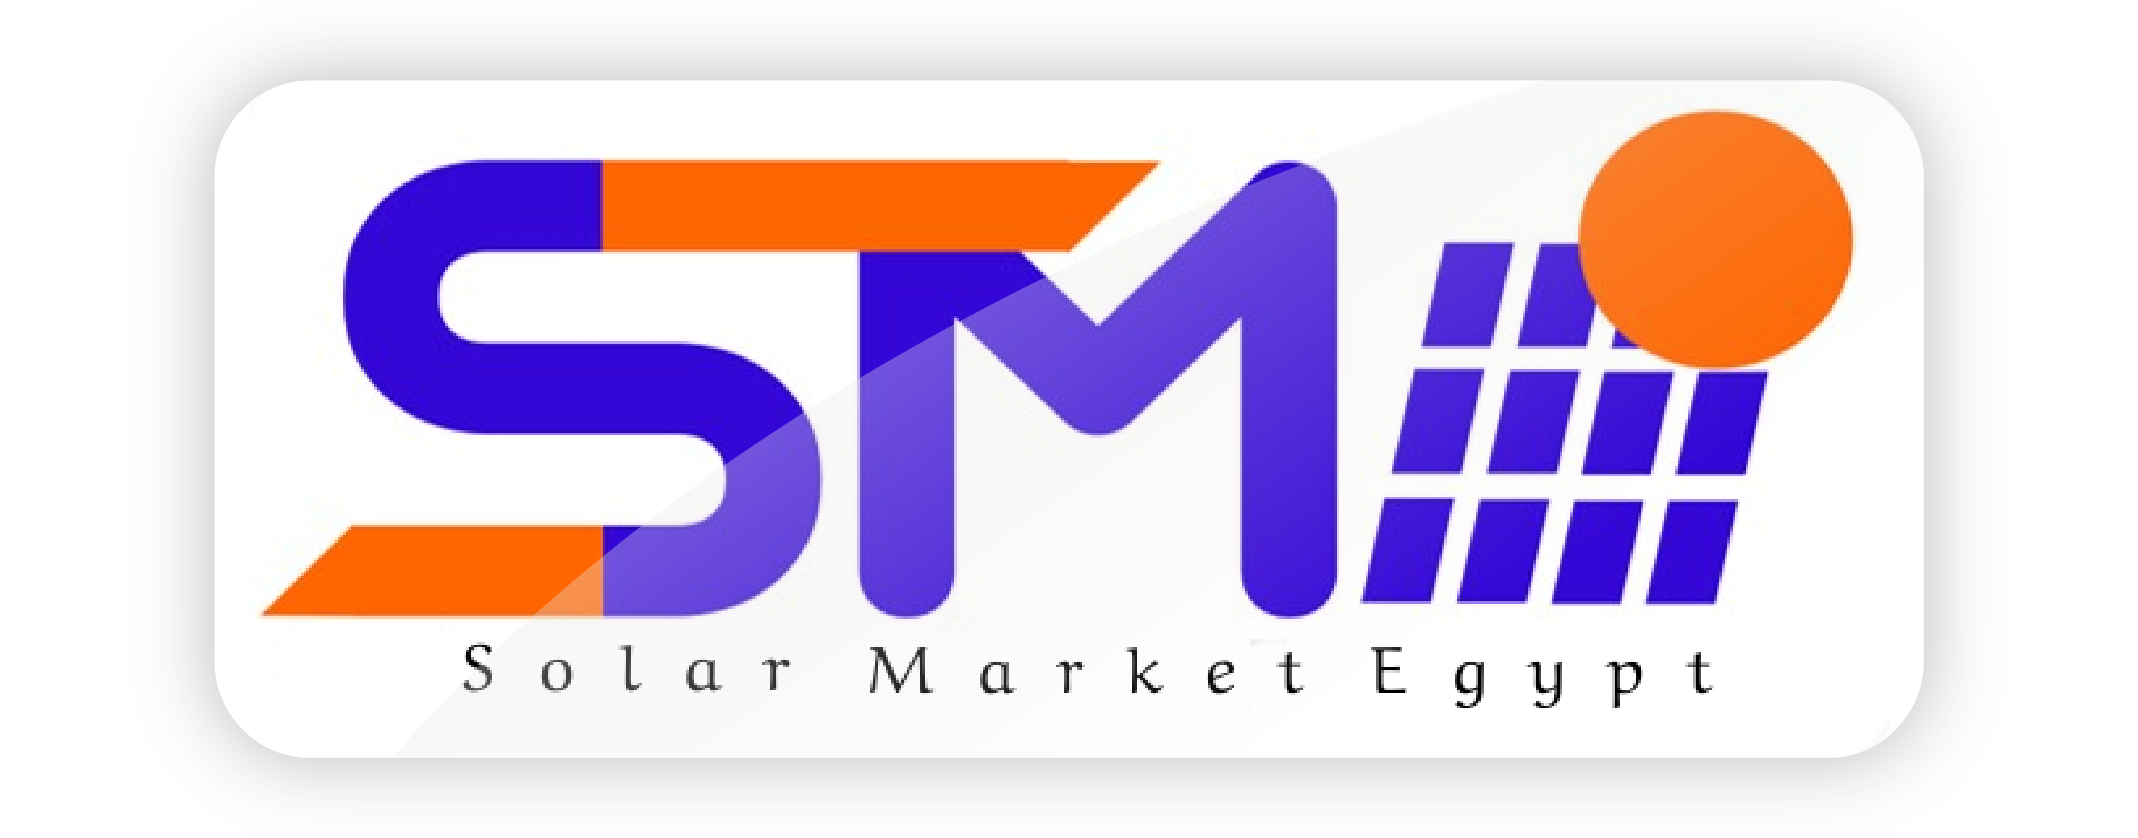 Solar market logo